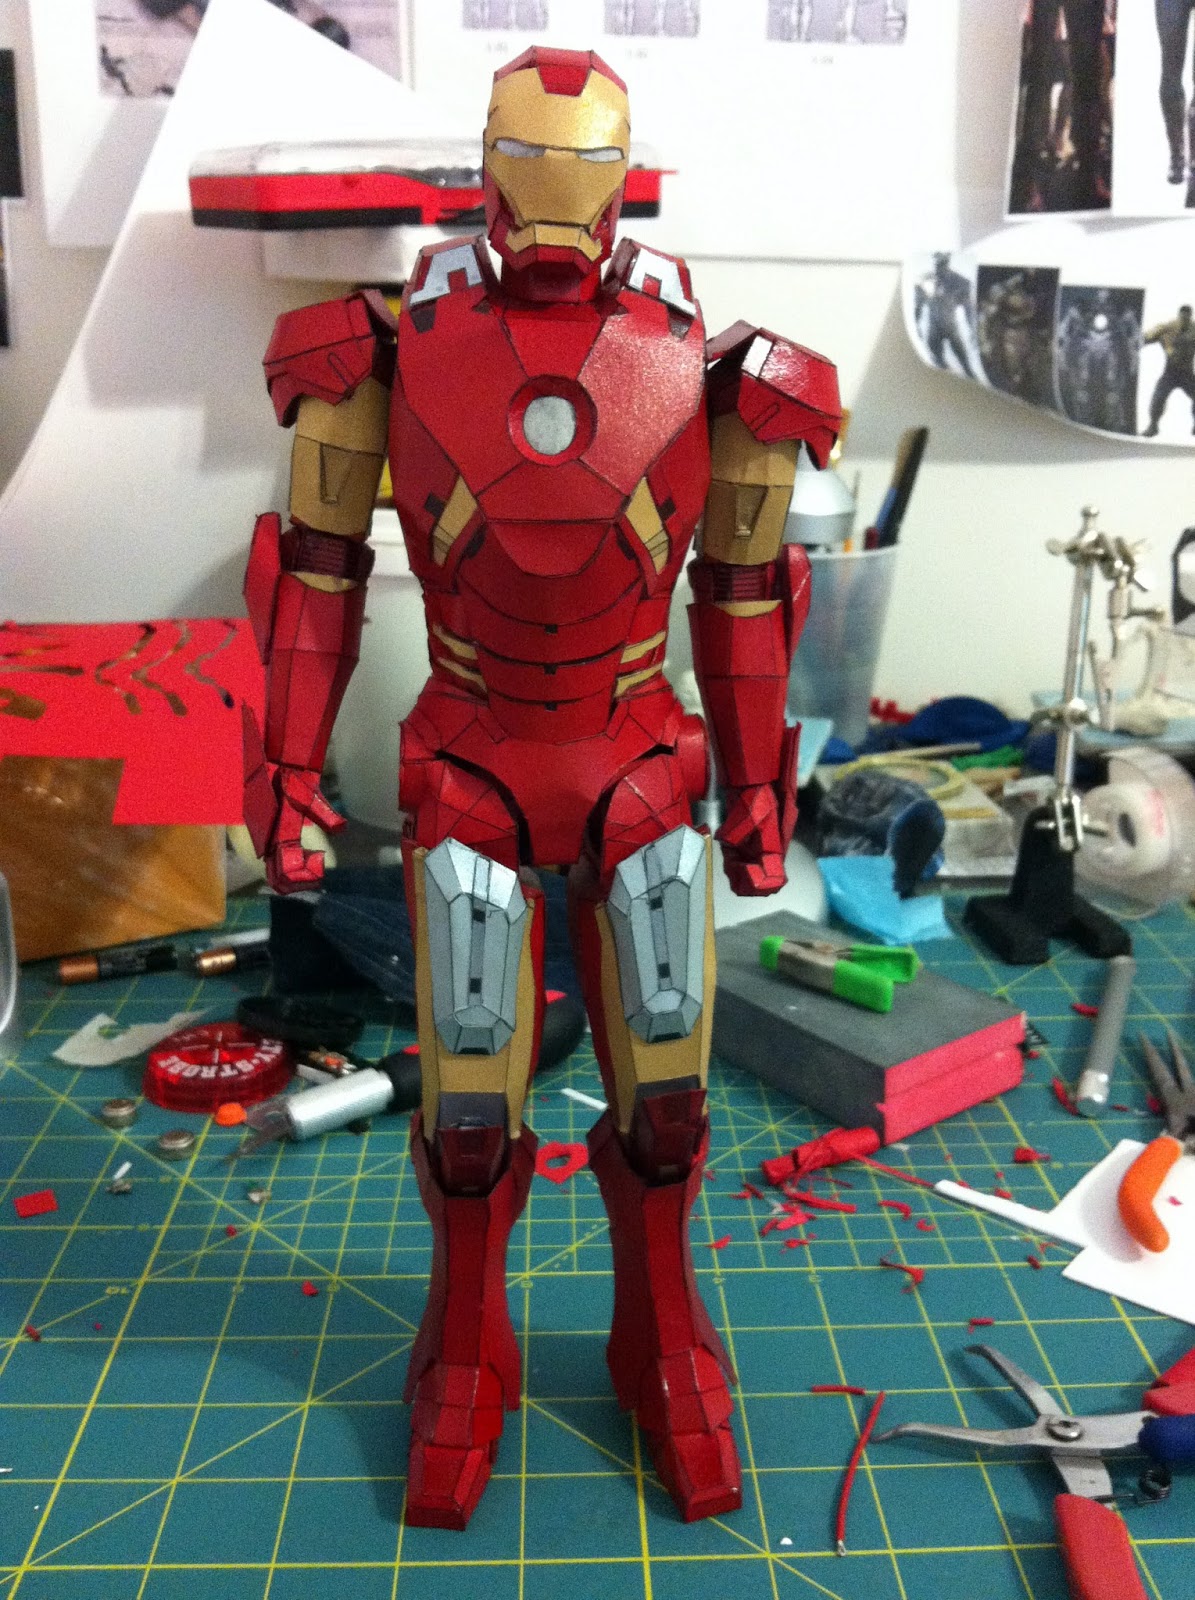 Paper Craft New 350 Papercraft Iron Man Full Armor | Images and Photos ...